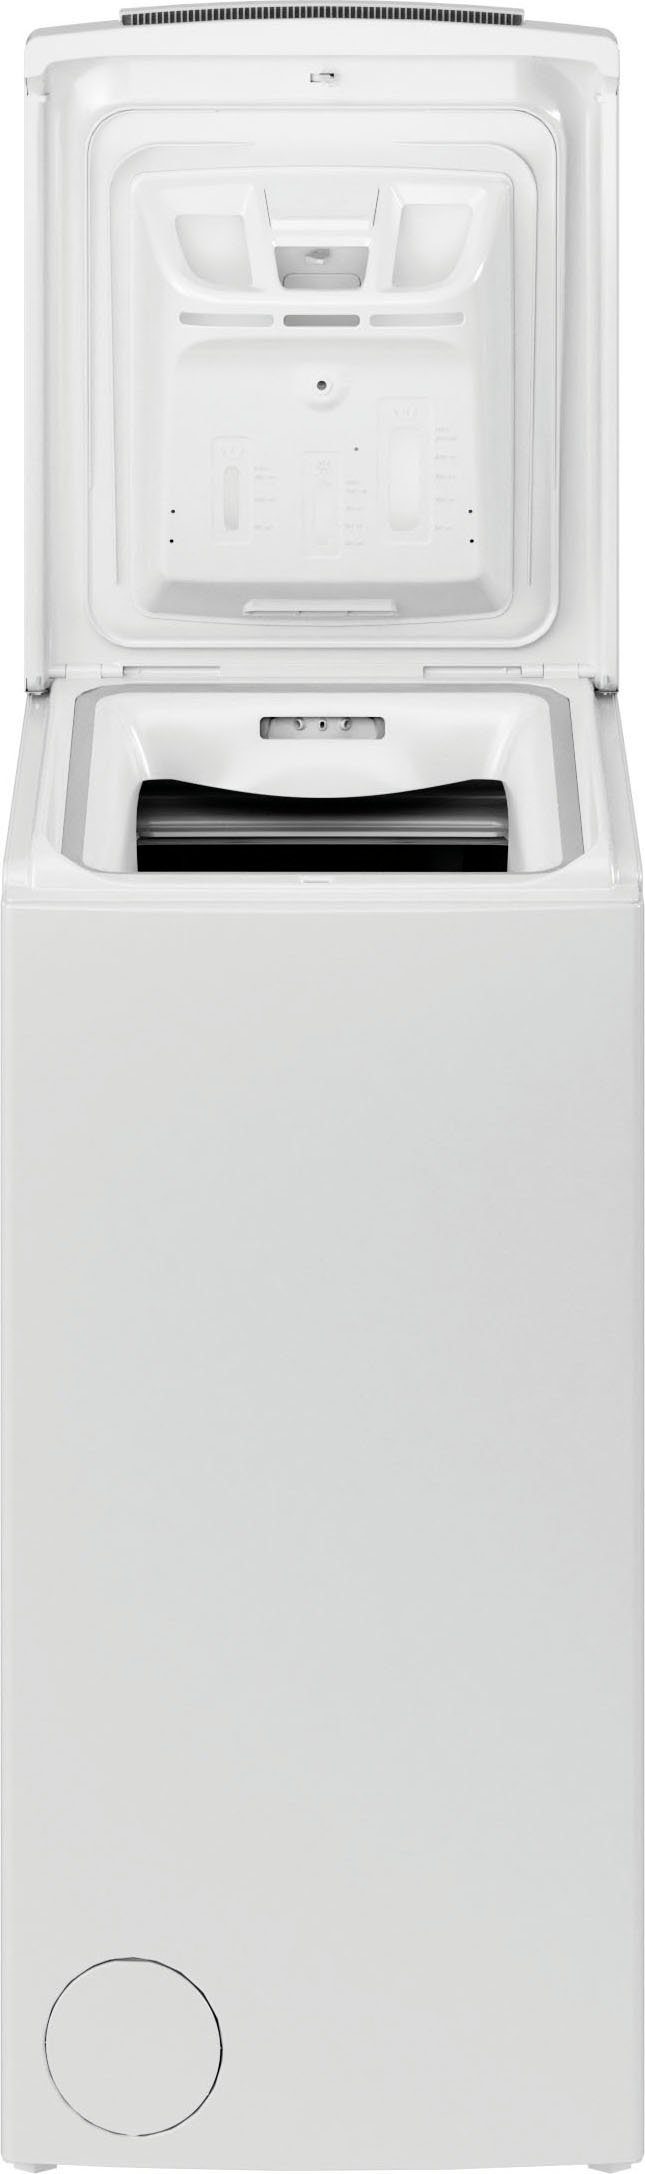 Toplader Smart 12C, U/min 1200 6 Waschmaschine BAUKNECHT WAT Eco kg,